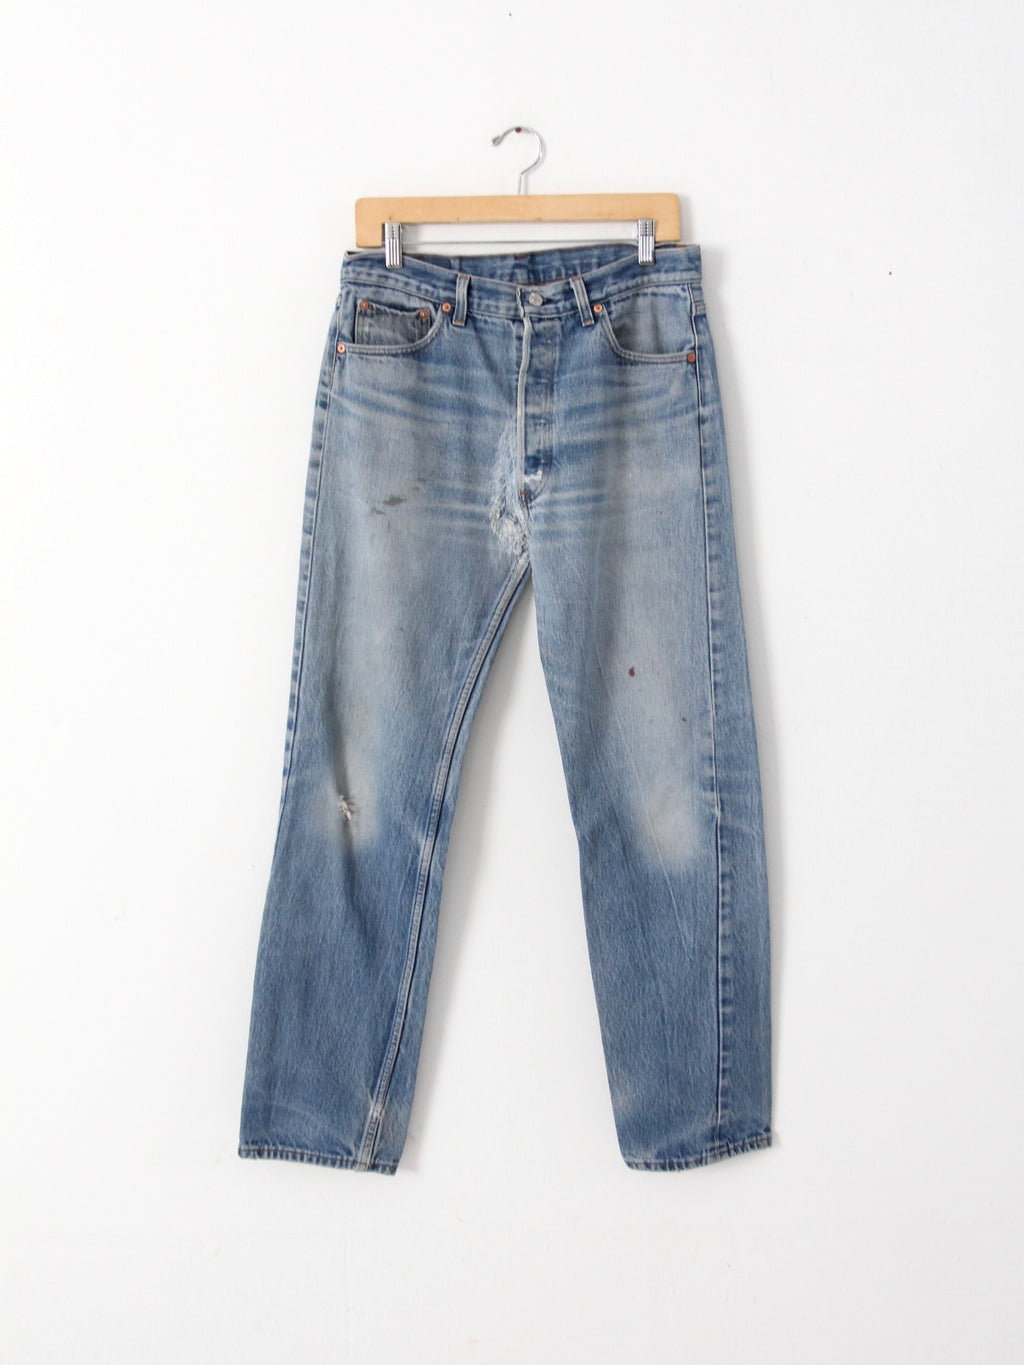 vintage Levis distressed 501 jeans, 33 x 31 – 86 Vintage